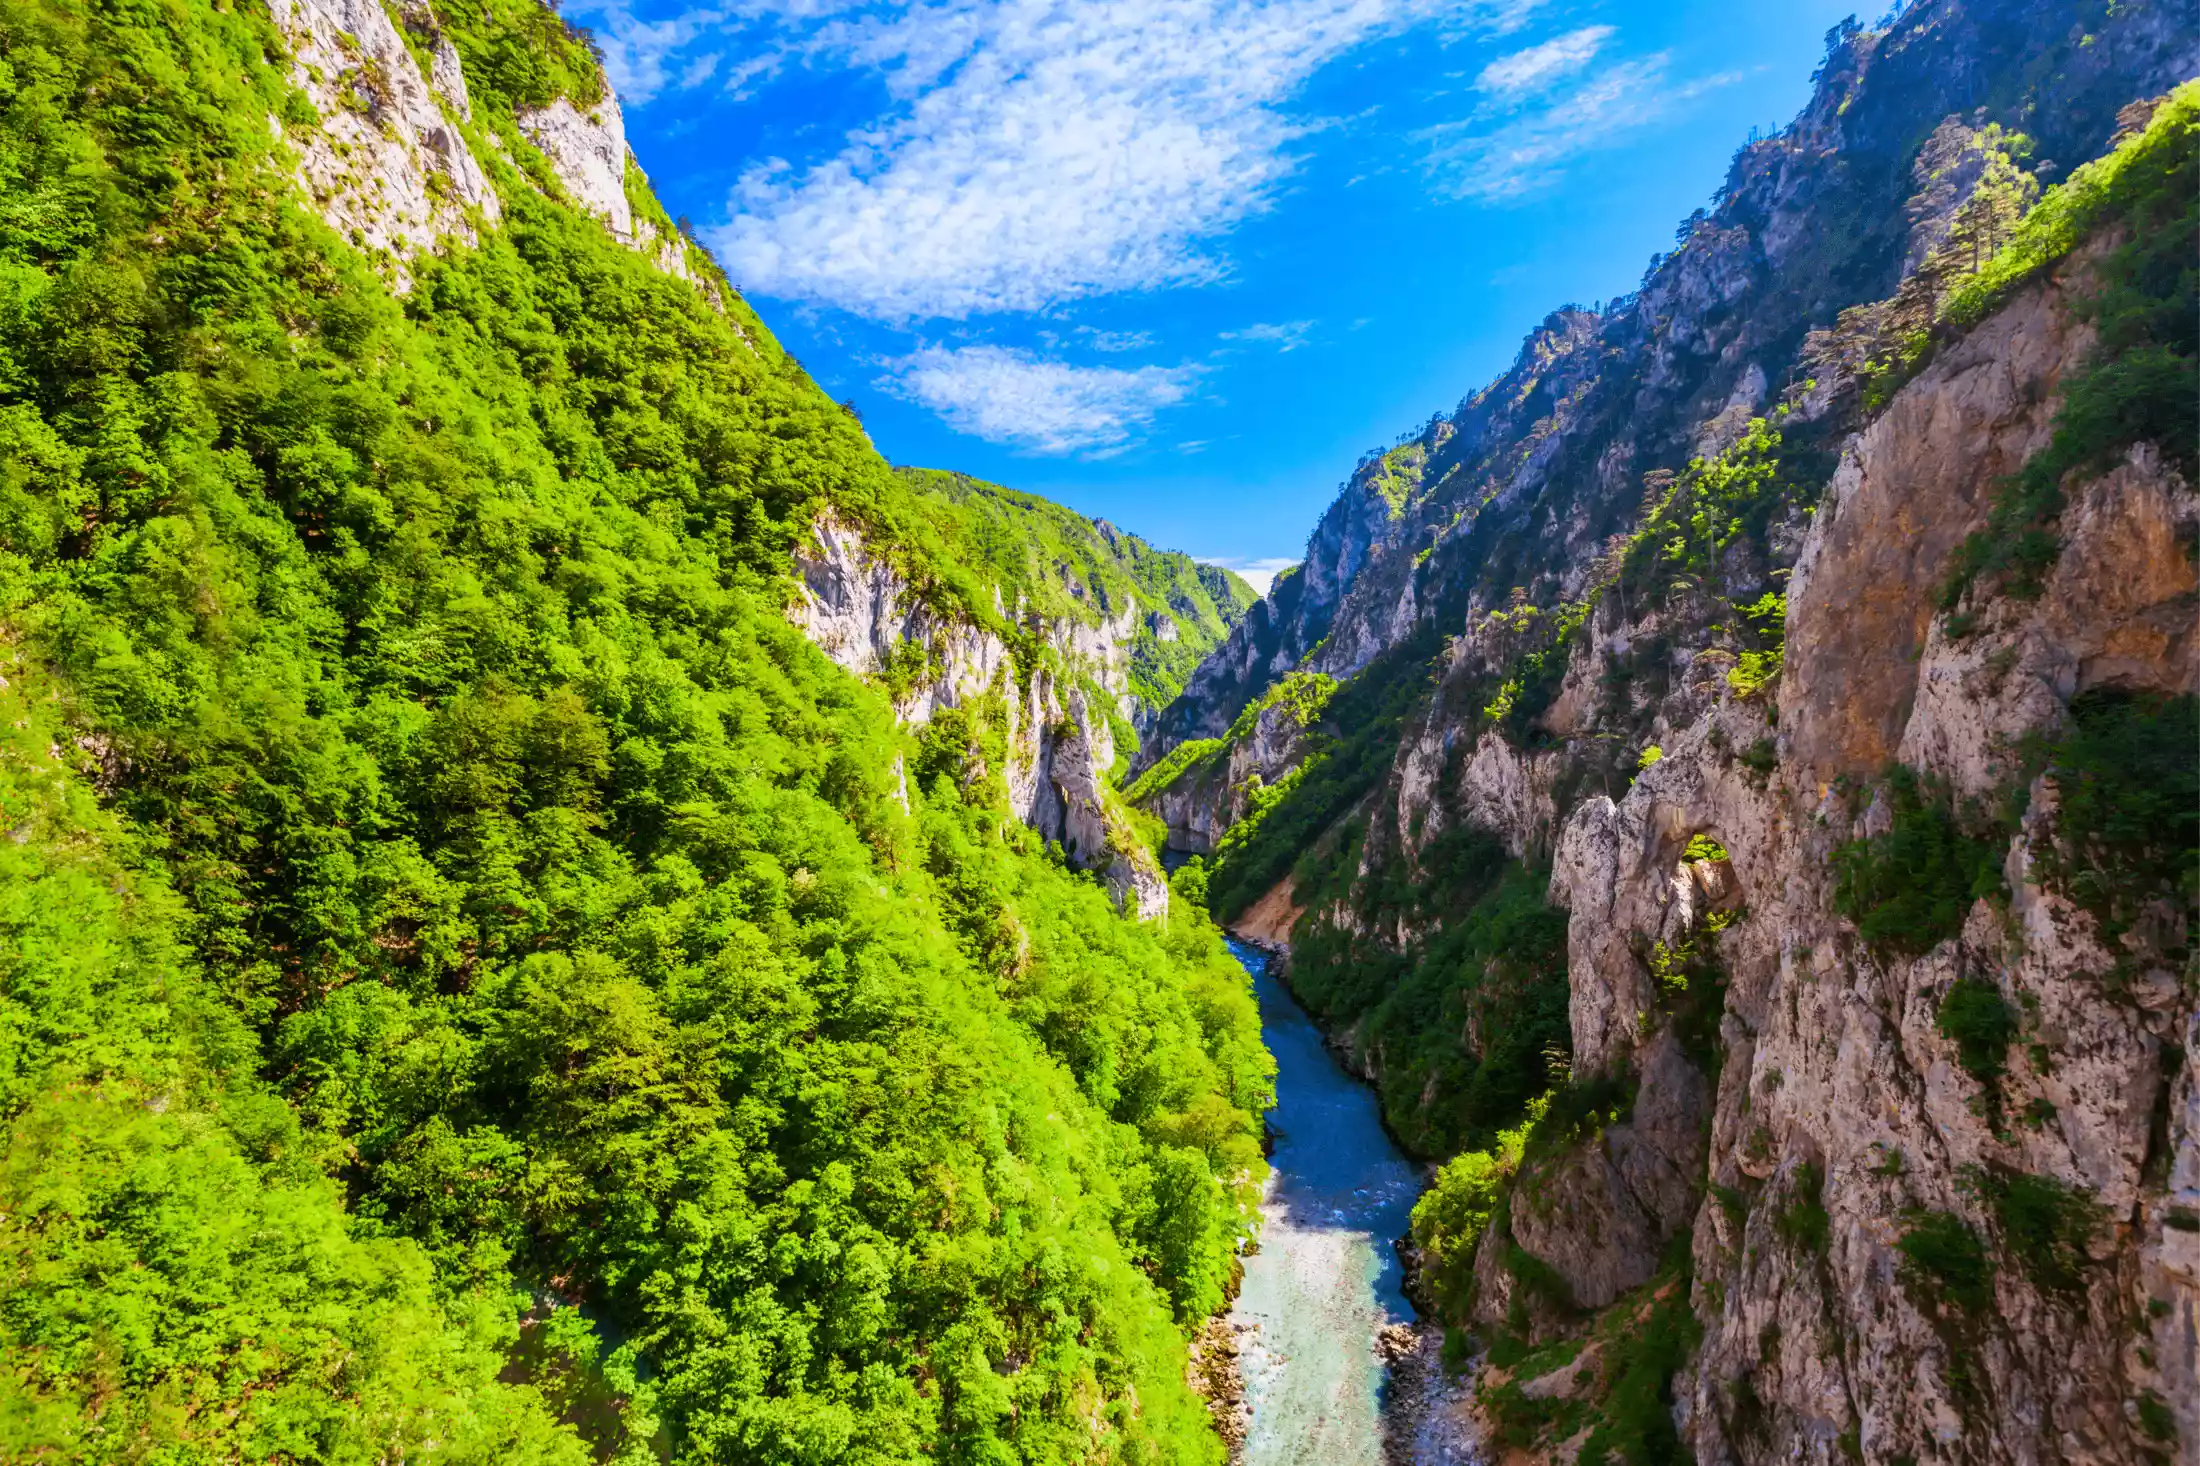 Tara River Canyon, Europe's deepest gorge